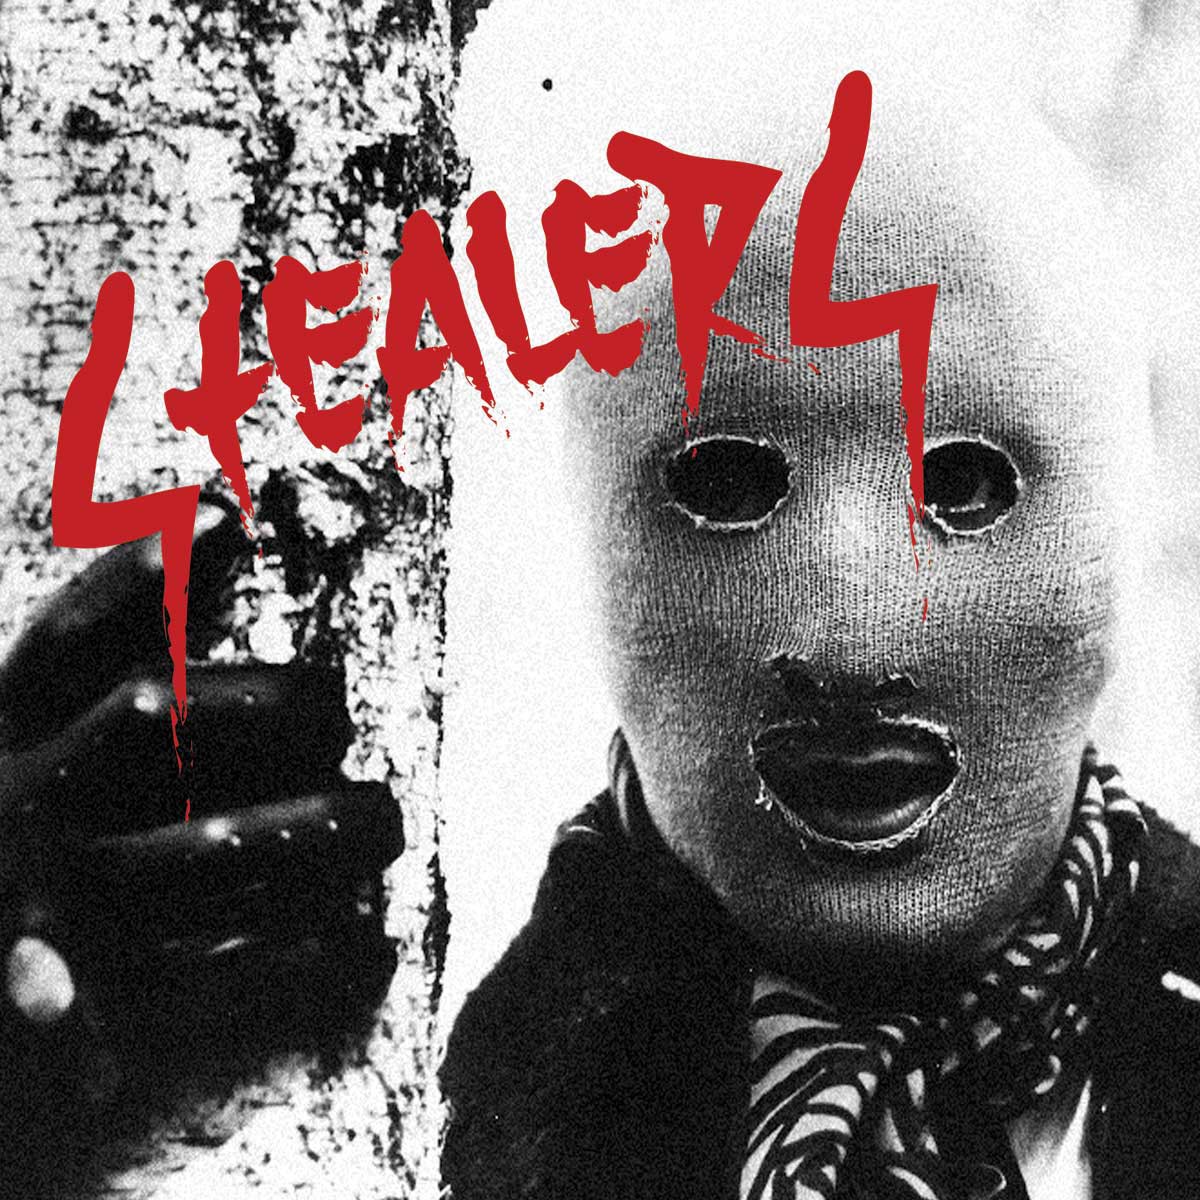 Stealers - Stealers LP (bloodred heavy black and white splatter)